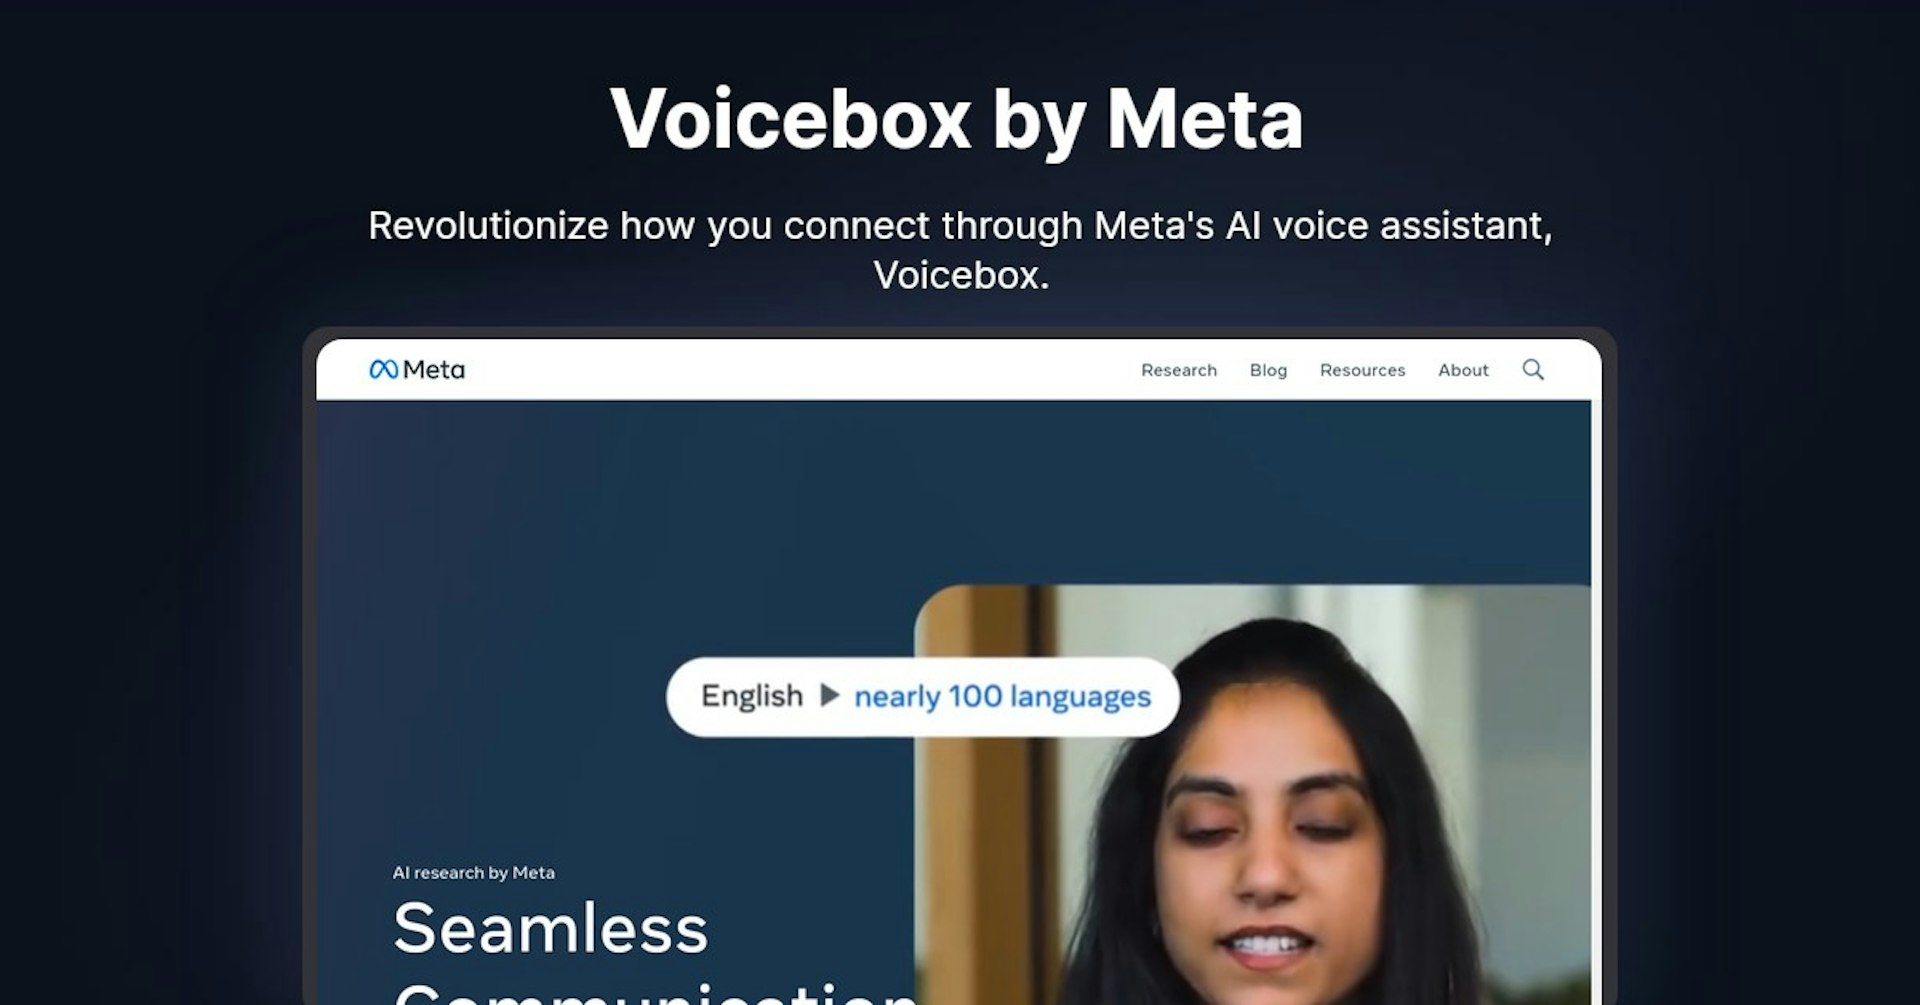 Voicebox by Meta